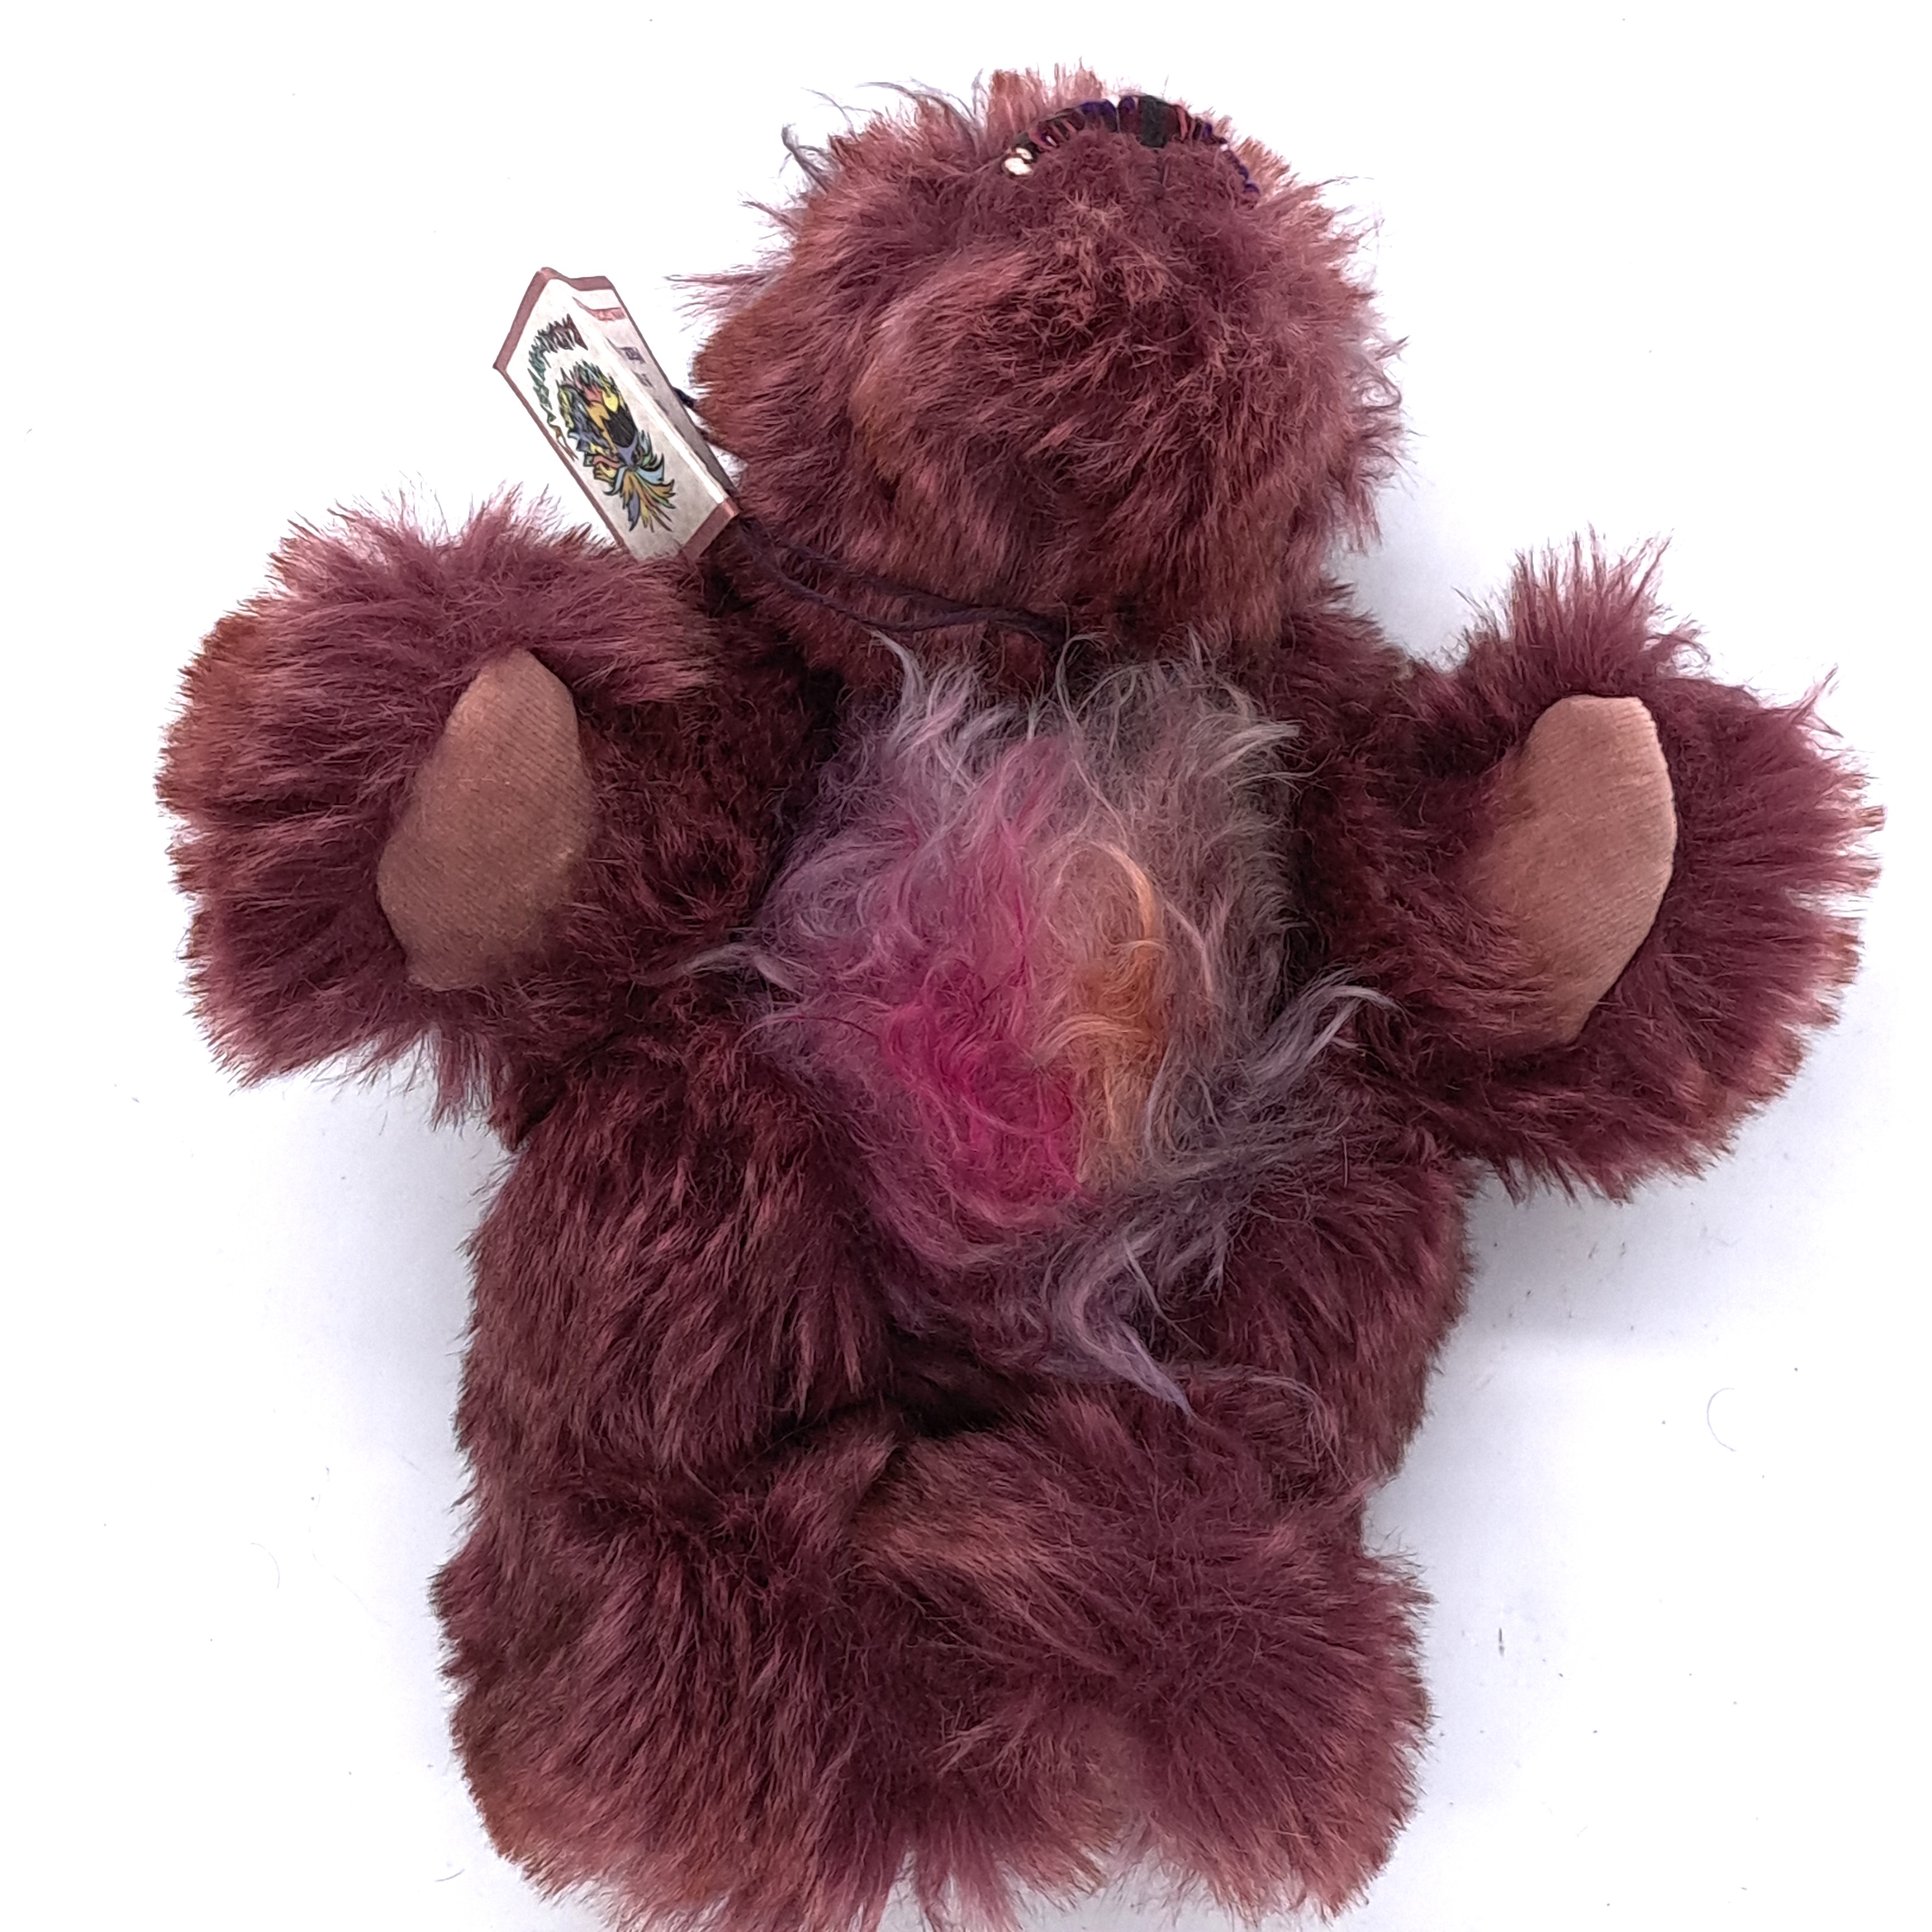 Barbara-Ann Bears artist teddy bear 'Plumley' - Image 2 of 2